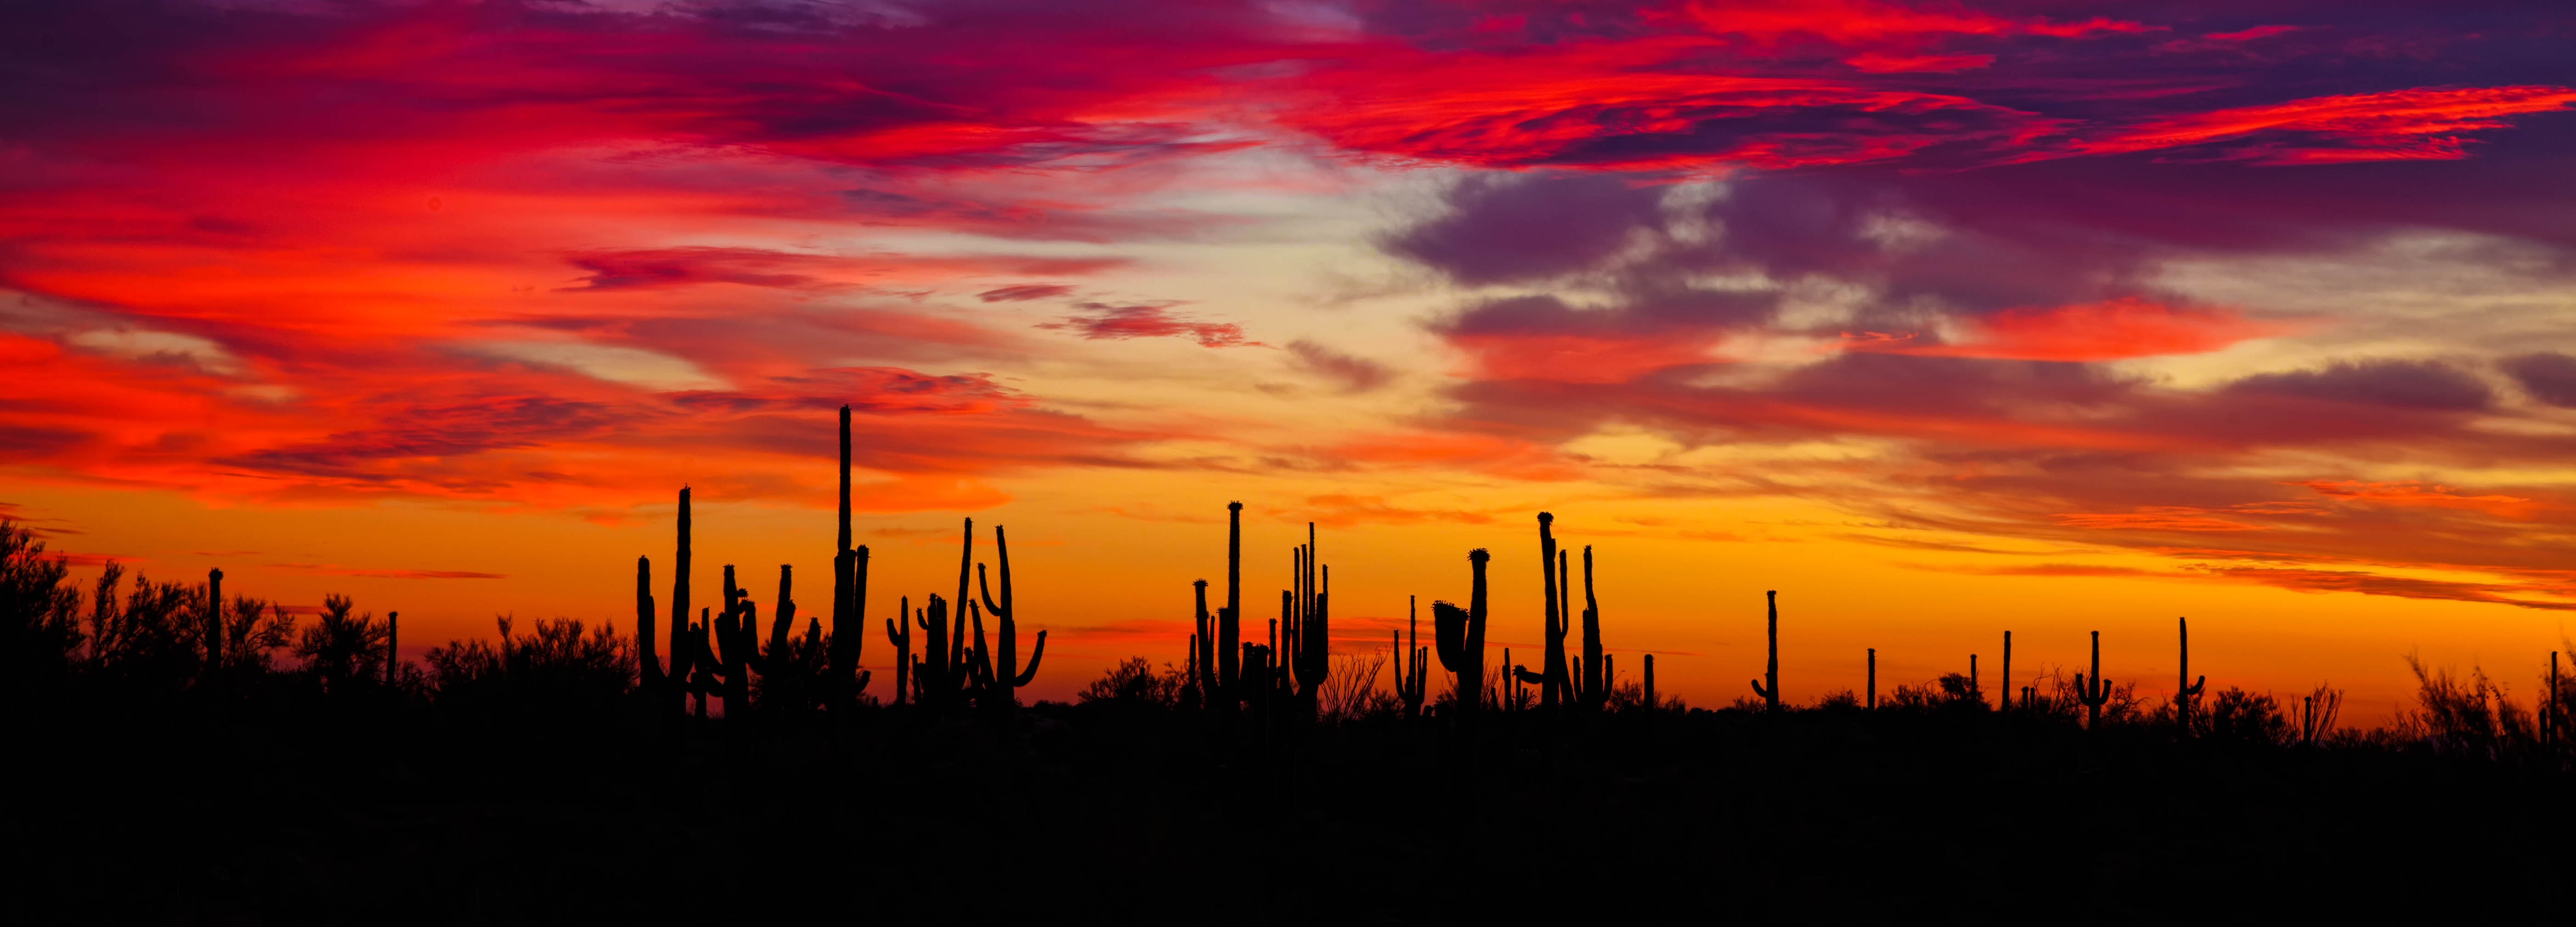 vertical wallpaper arizona, cactuses, nature, sunset, silhouettes